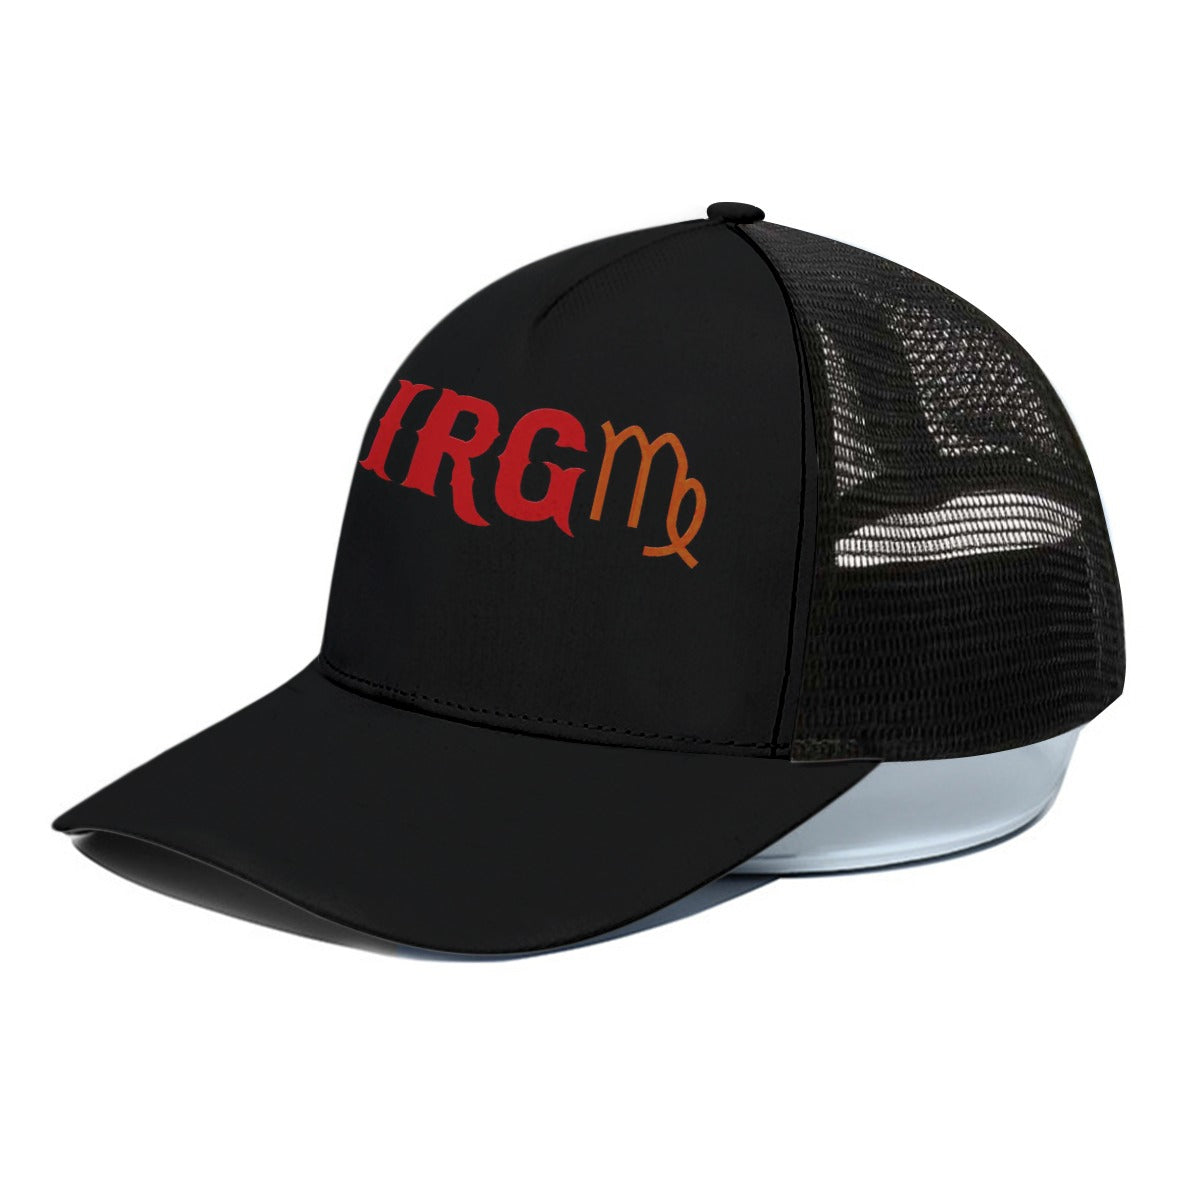 Unisex Virgo Trucker Hat With Black Half-mesh